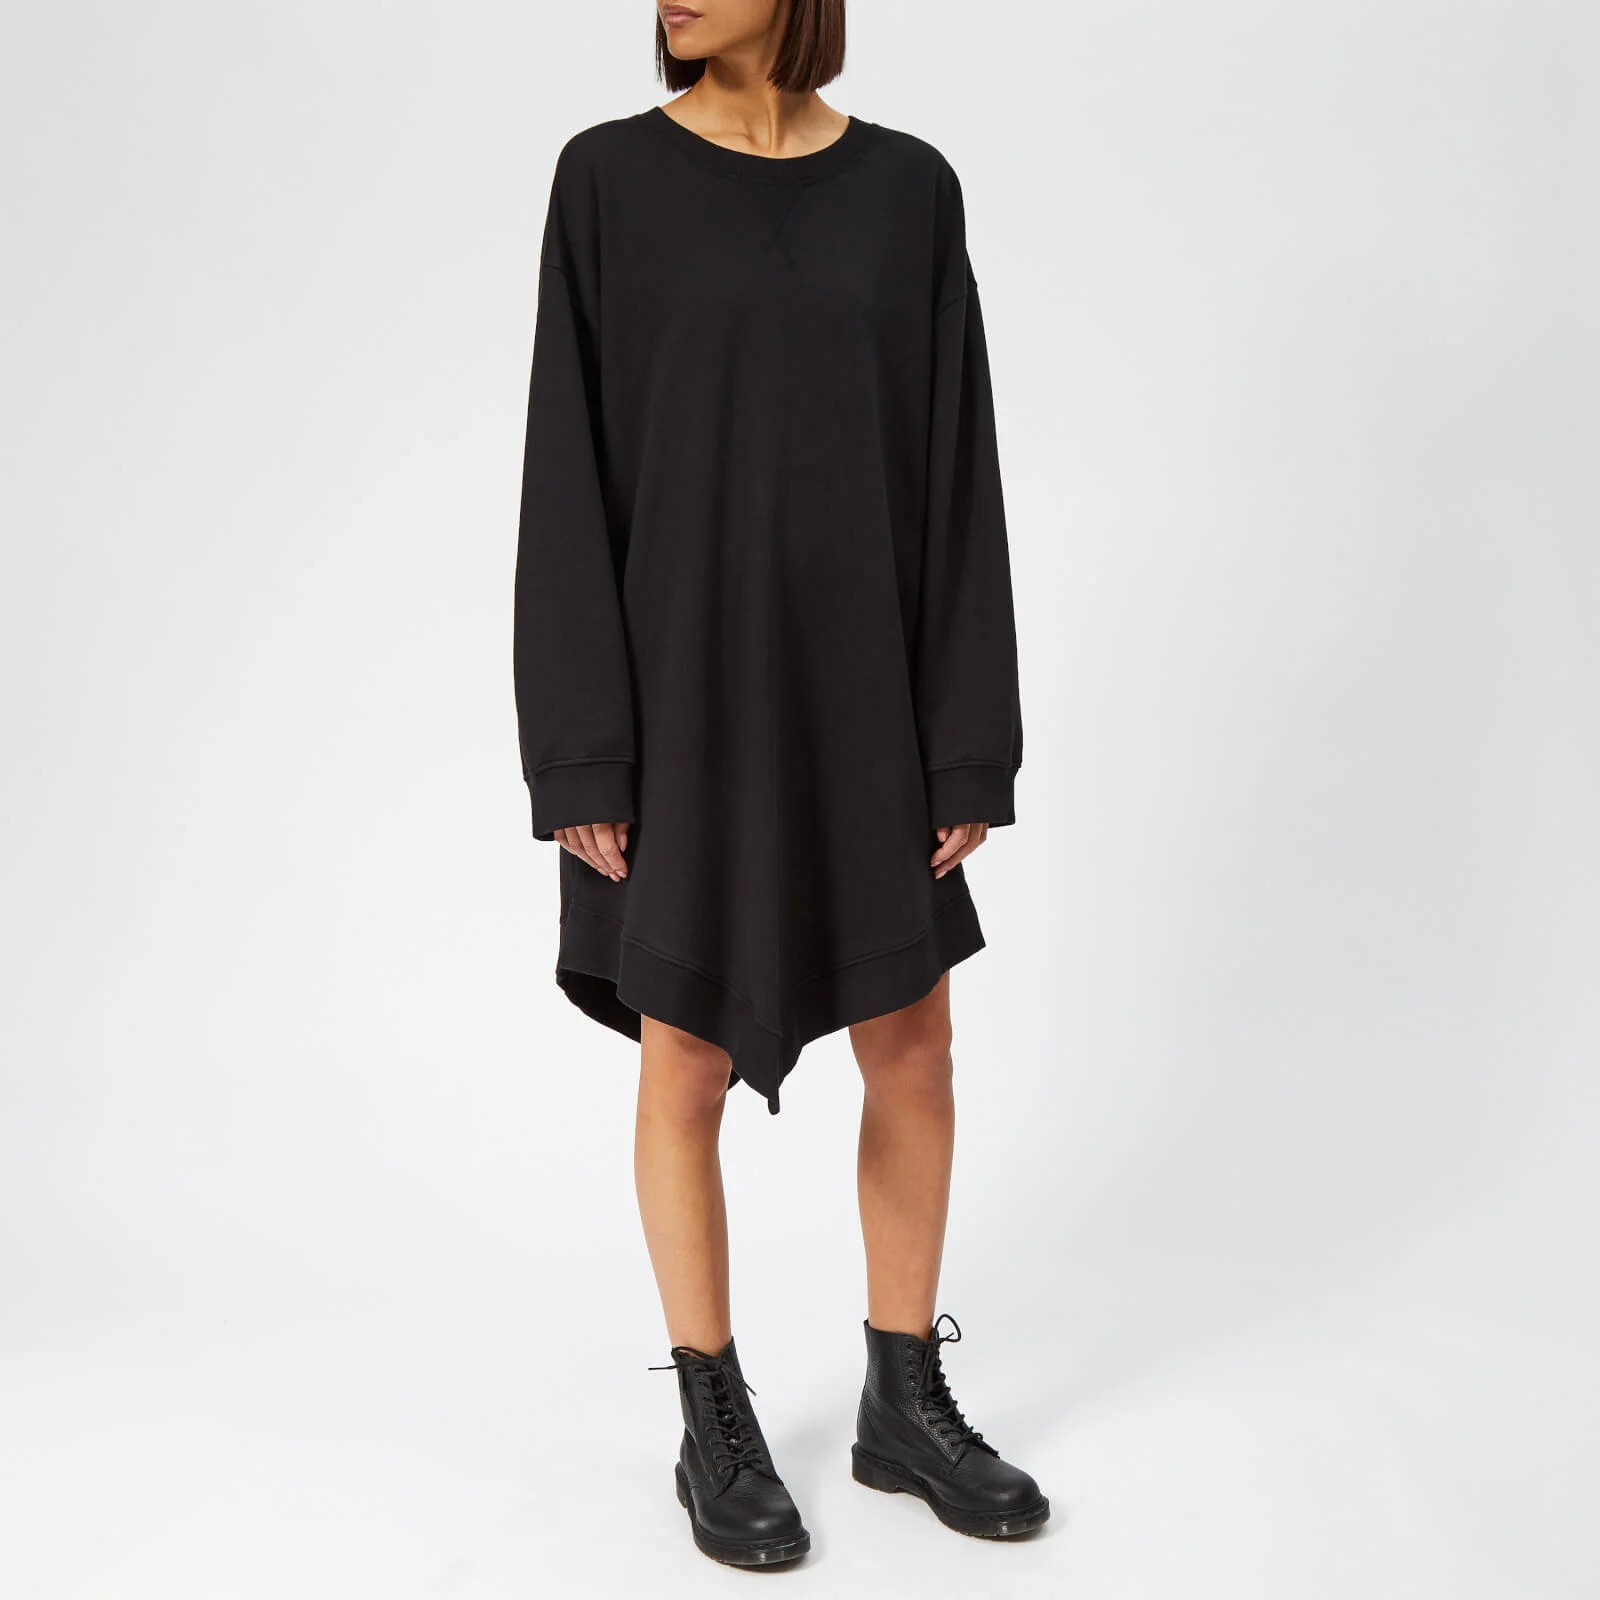 MM6 Maison Margiela Women's Angle Sweatshirt Dress - Black Image 1